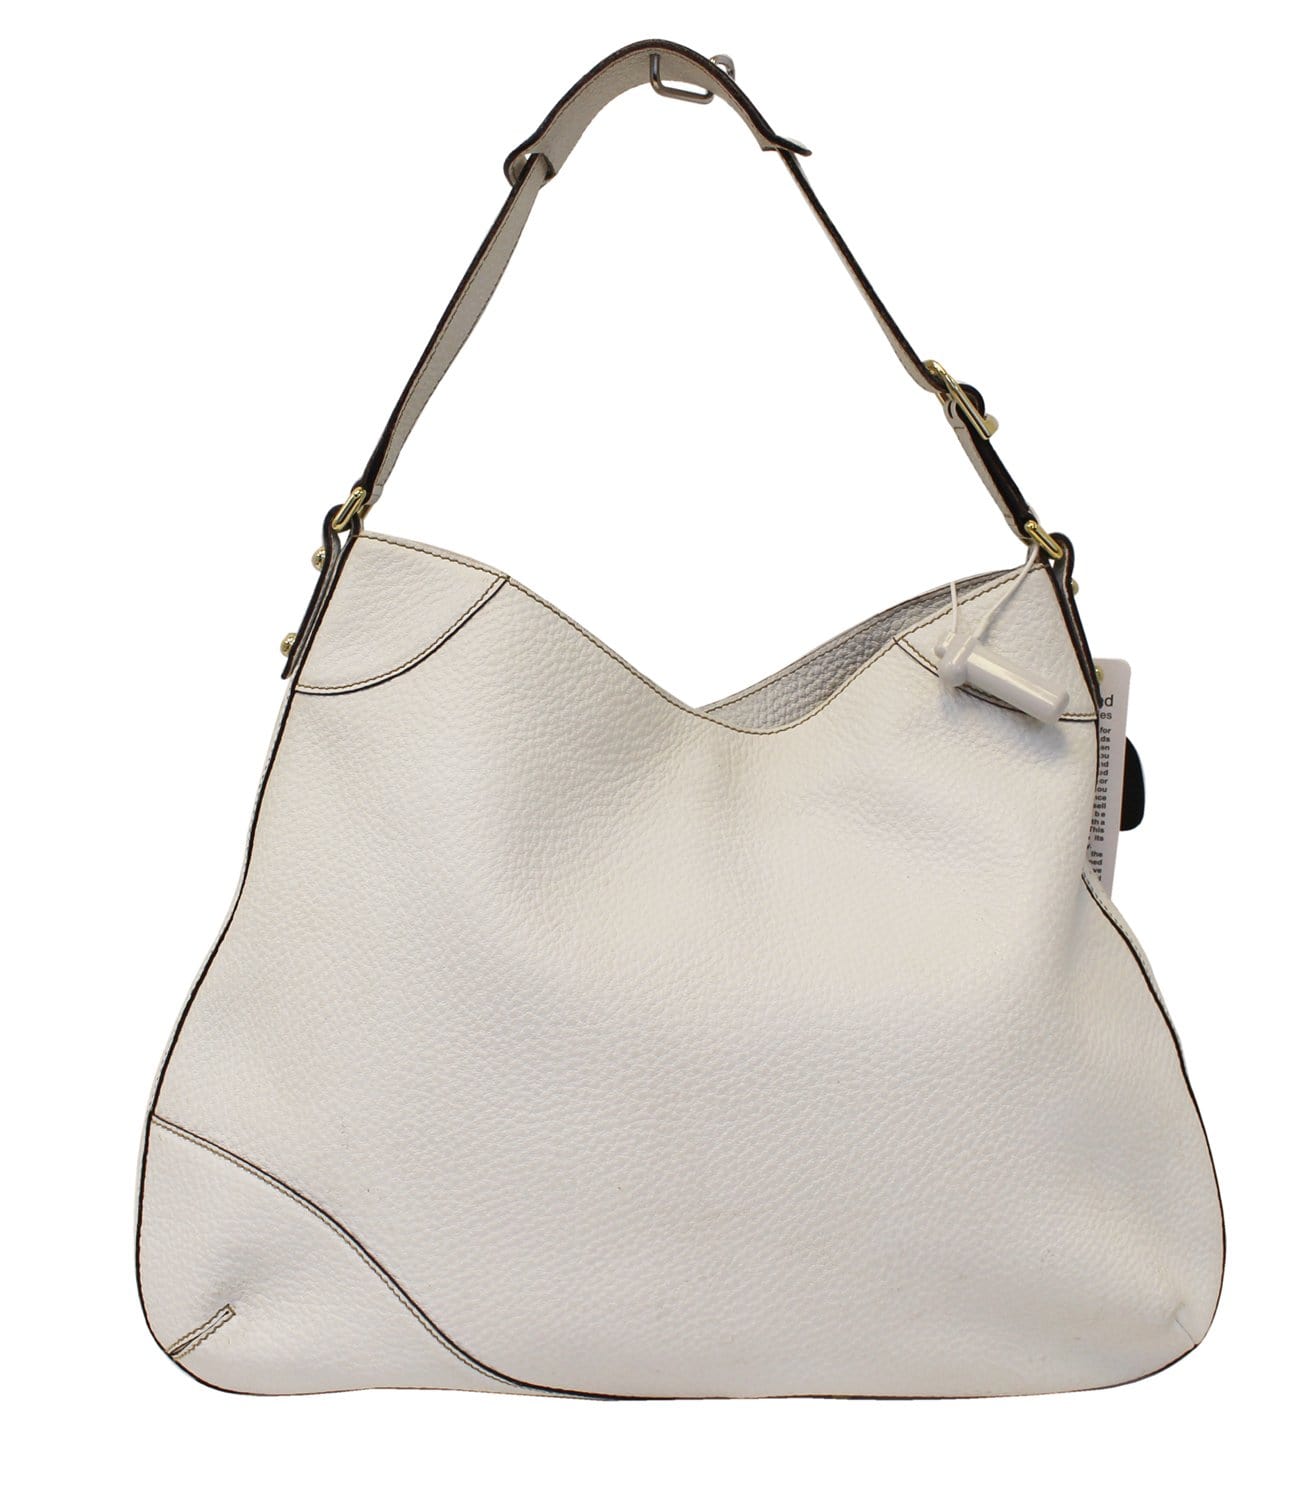 Gucci, Bags, Authentic Gucci Heritage Hobo Handbag